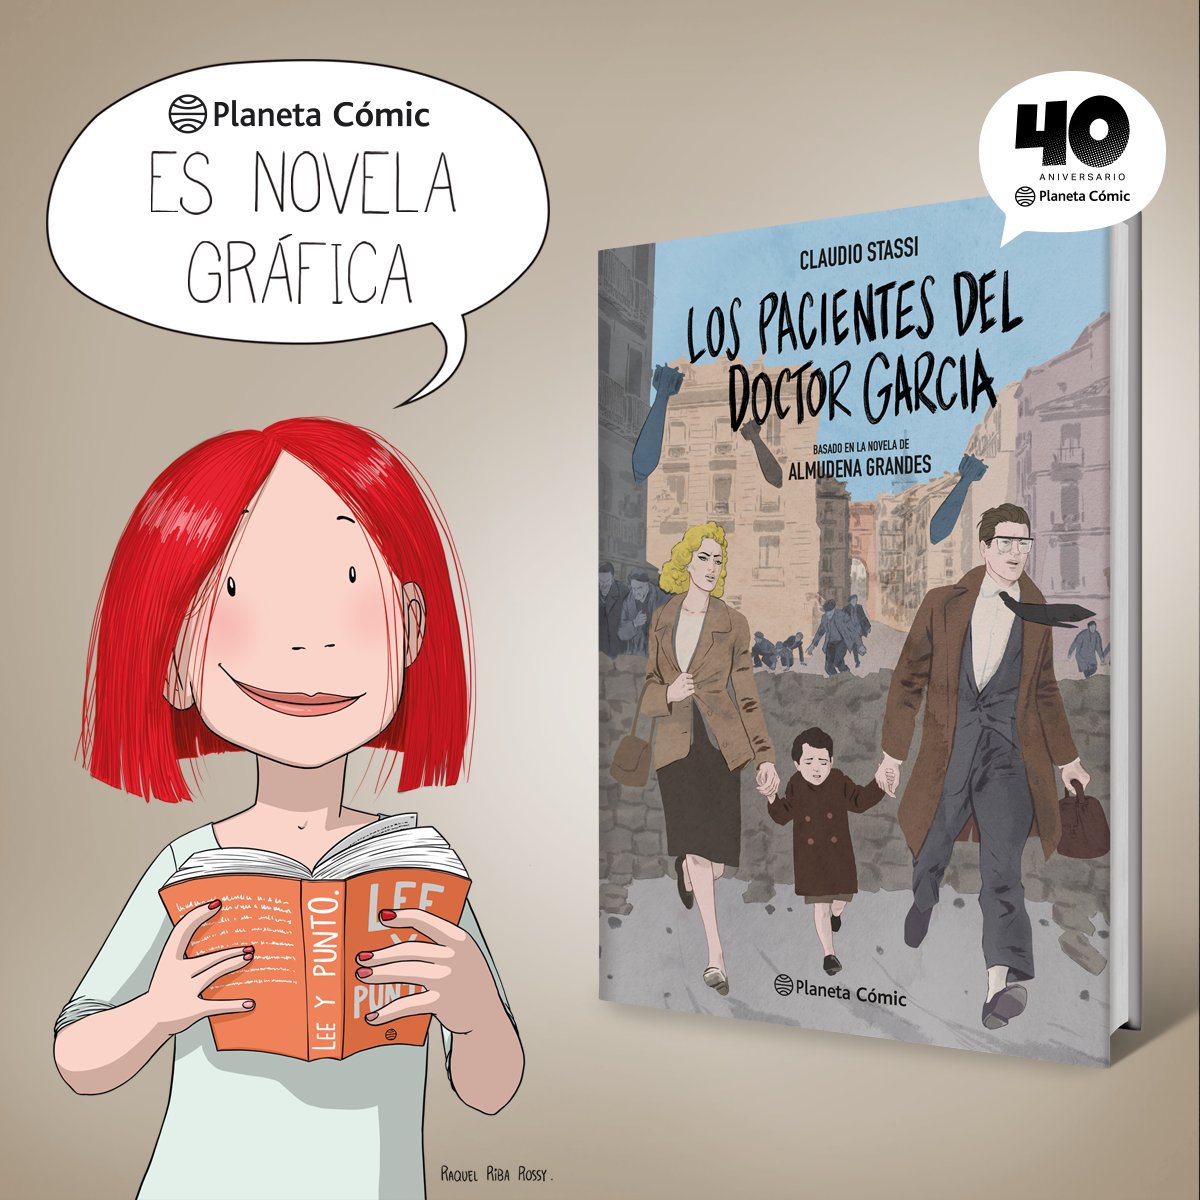 Comic y novela gráfica en bibliotecas. Planeta Biblioteca 2020/02/10.